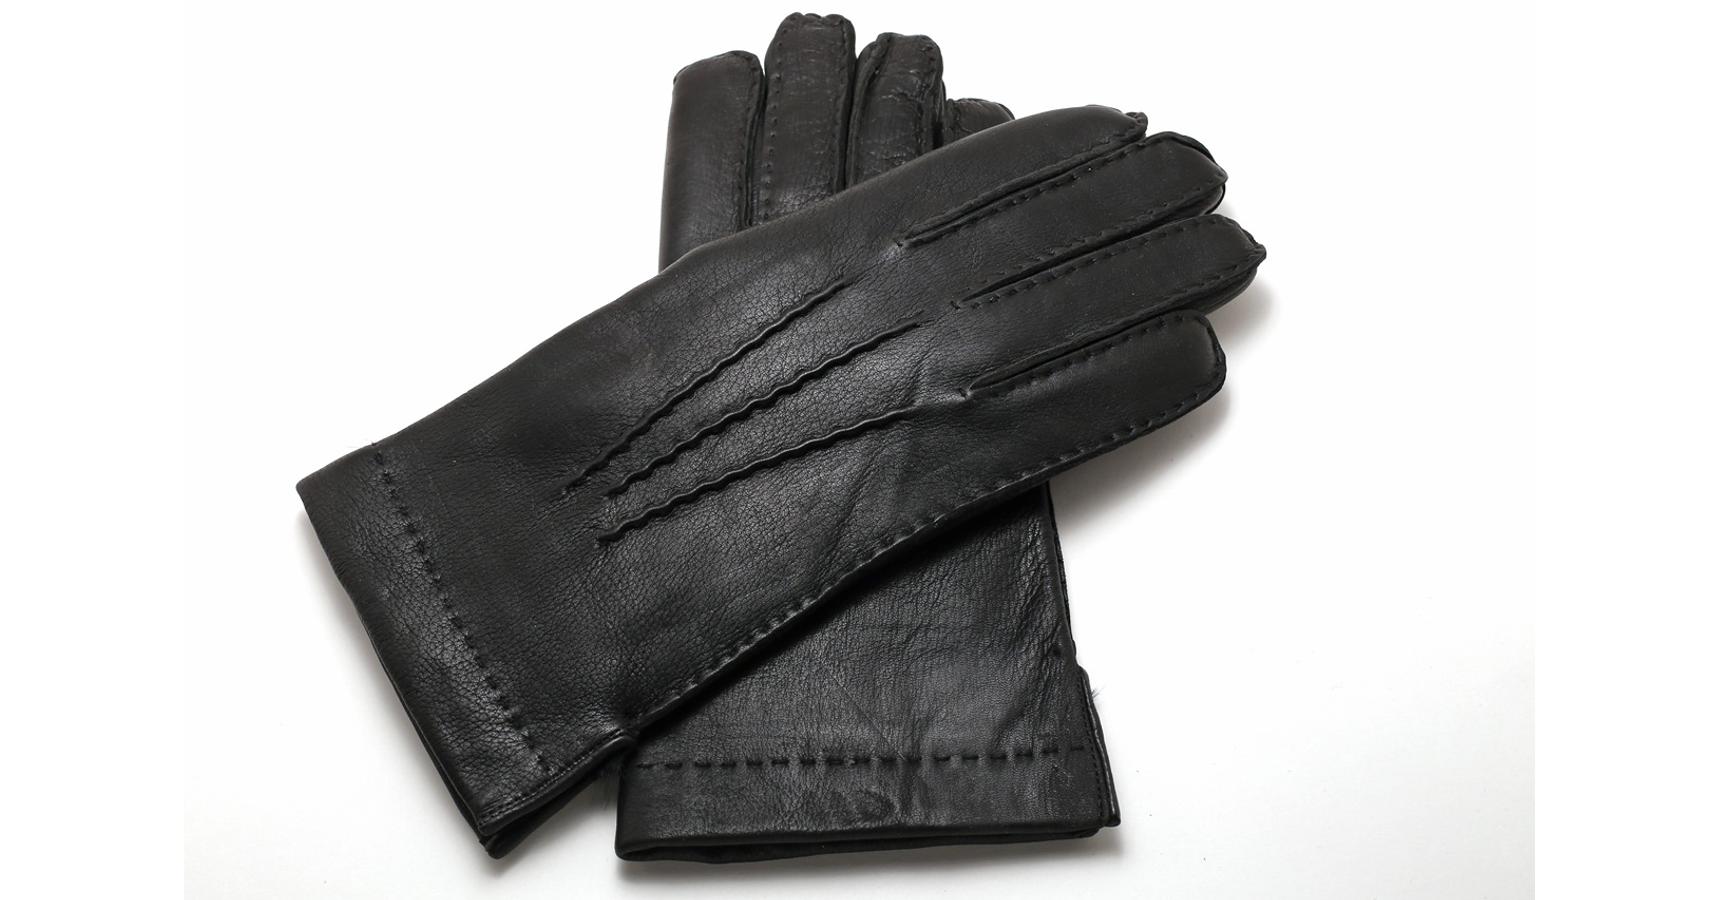 leather gloves rabbit